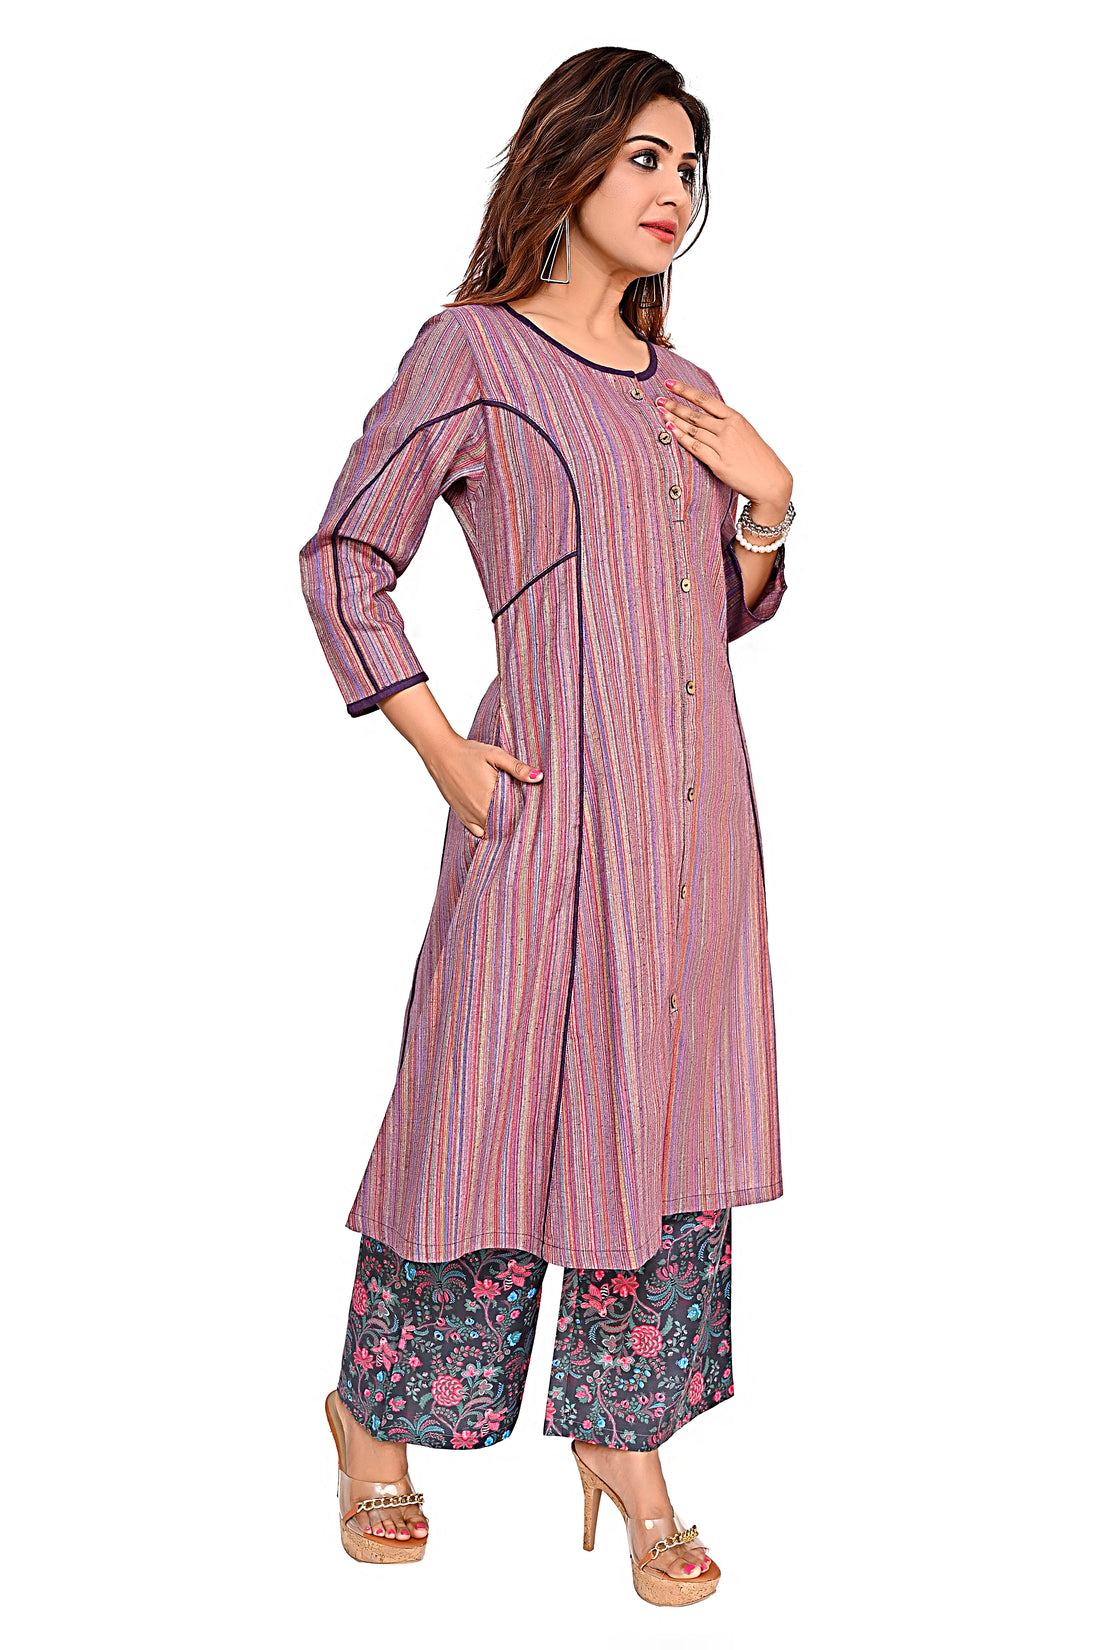 Nirmal Online Premium Cotton co-ord set for Women in Purple Colour Stripe